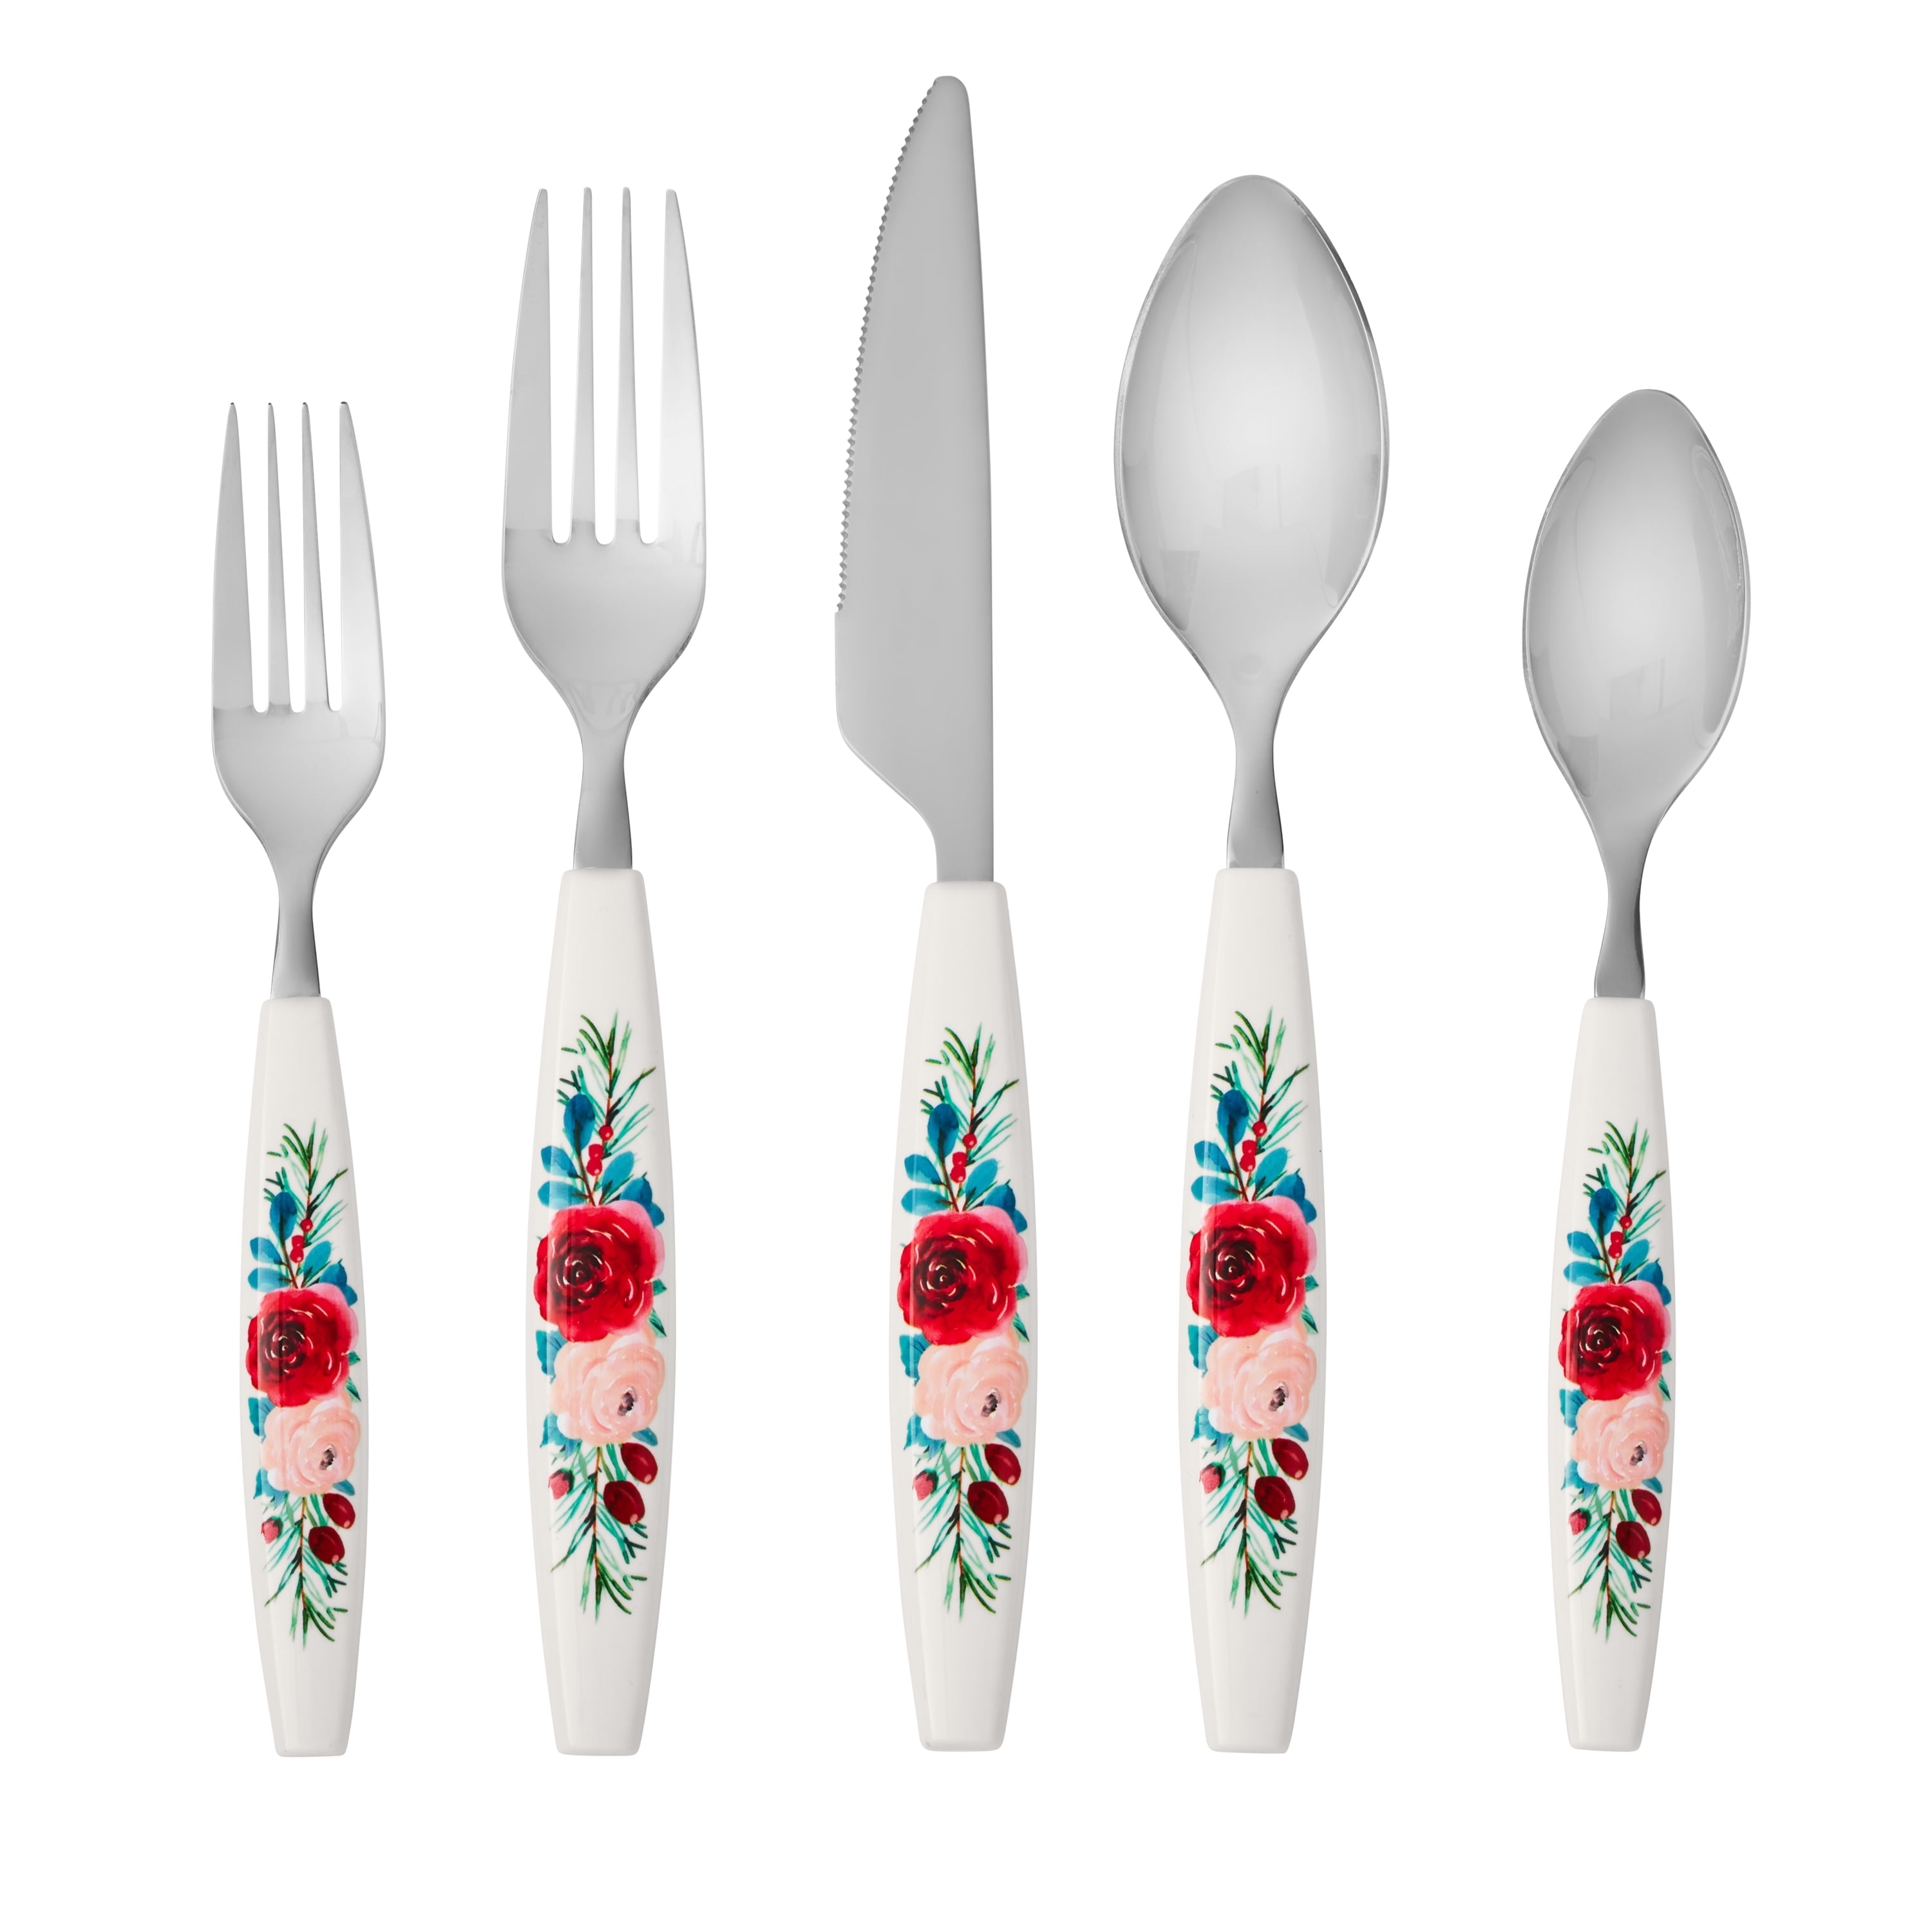 The Pioneer Woman Sweet Rose 20-Piece Stainless Steel Cutlery Set